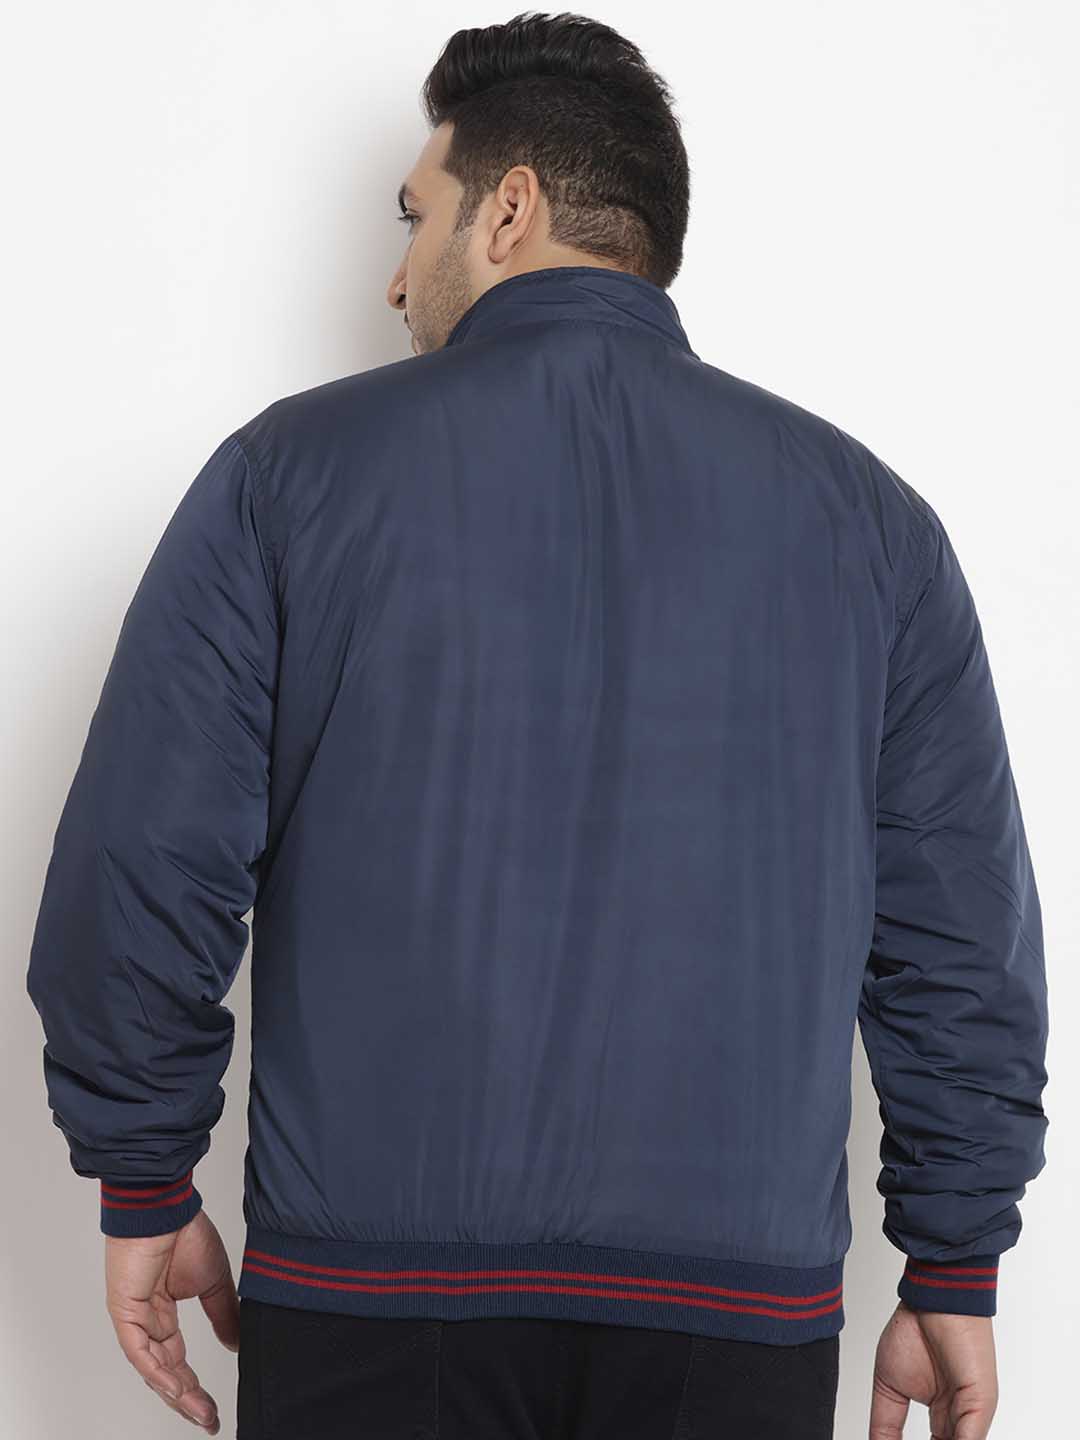 winterwear/jackets/BEPLJPJKT7361/bepljpjkt7361-6.jpg